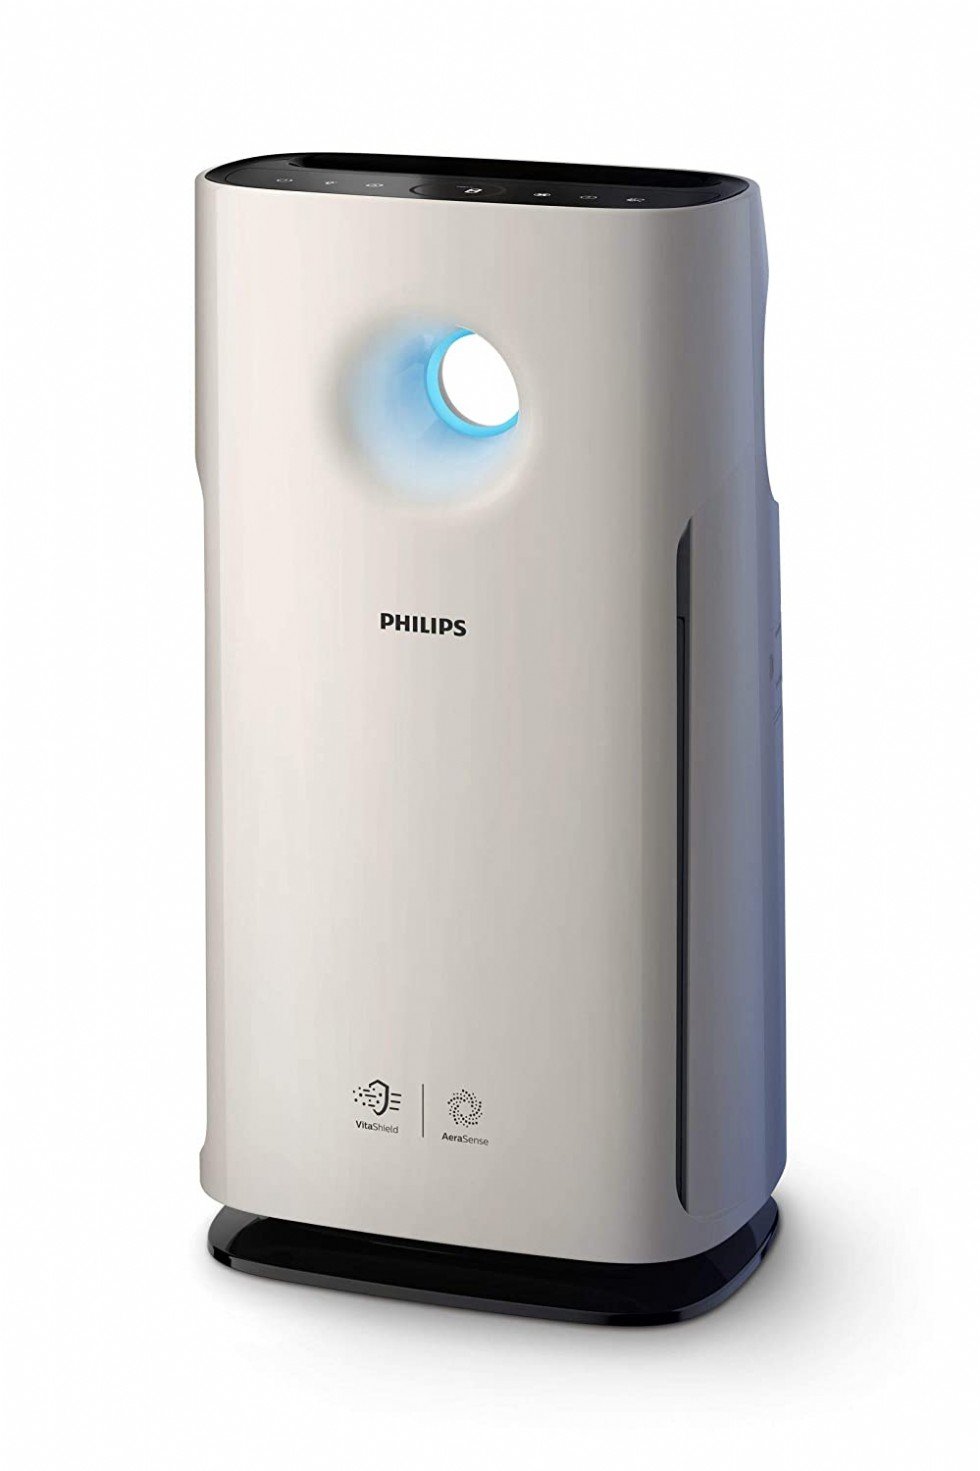 Do air purifiers cause sinus problems? Can air purifiers ...